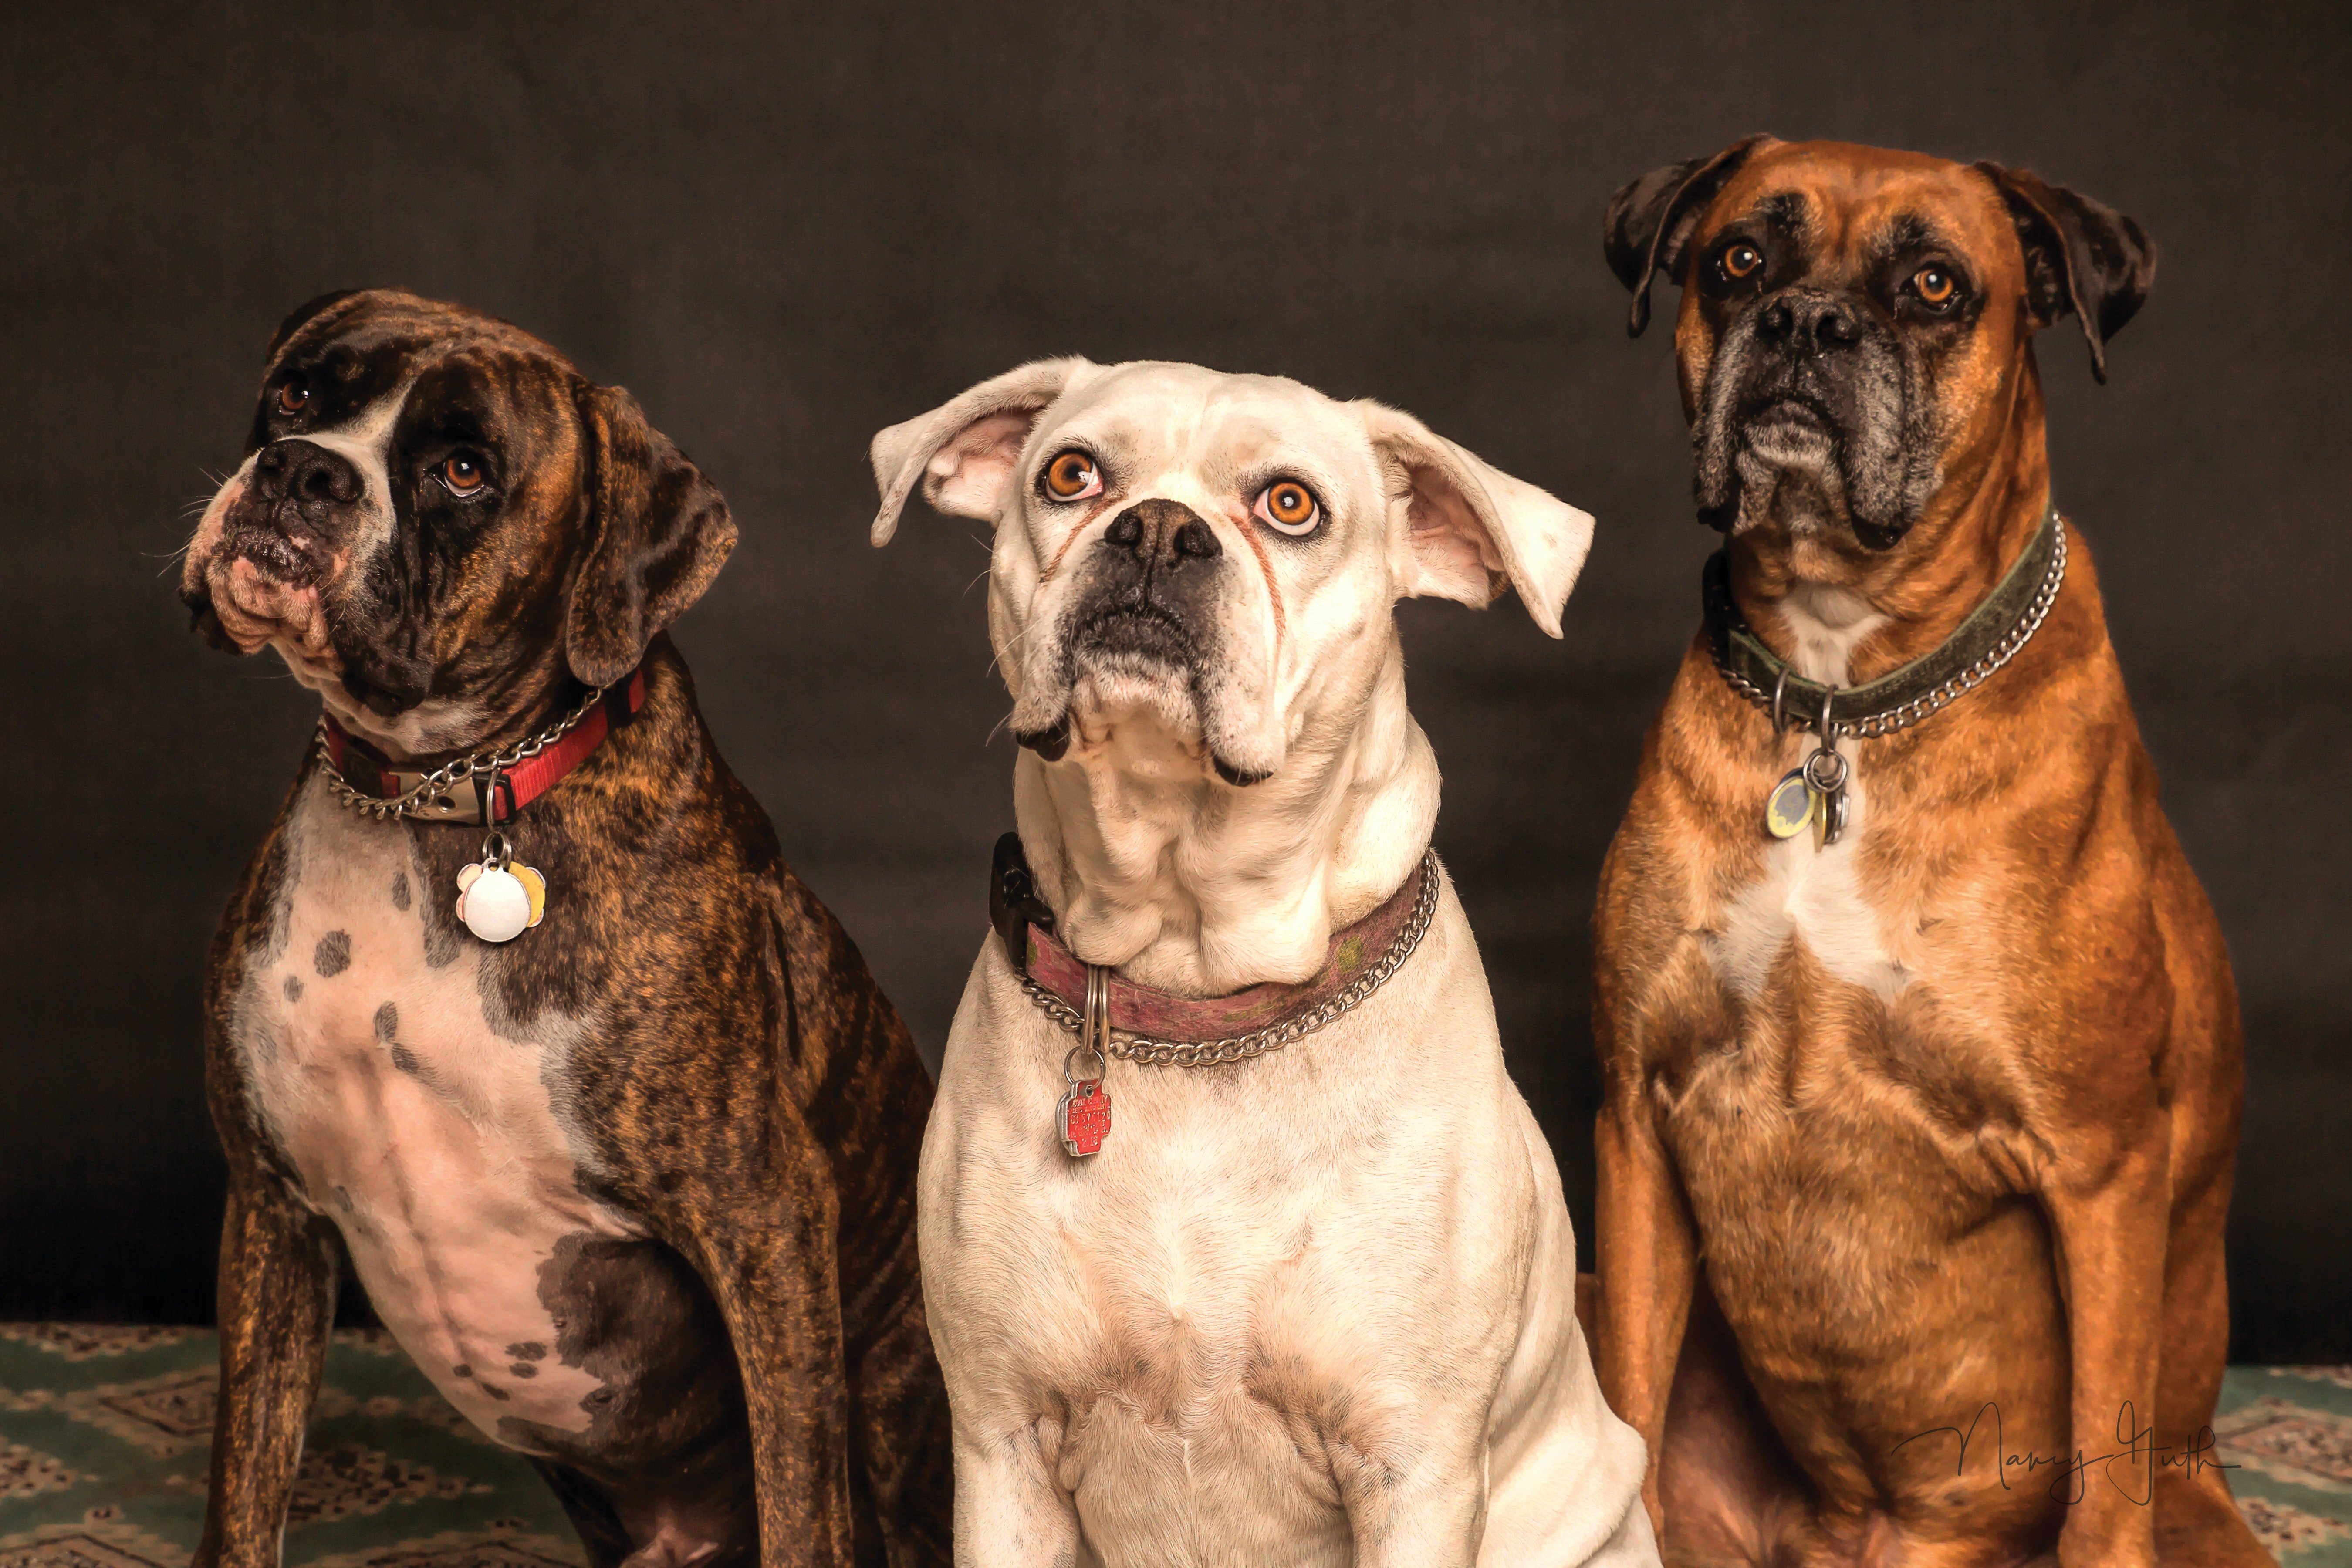 Three dogs | Source: Pexels